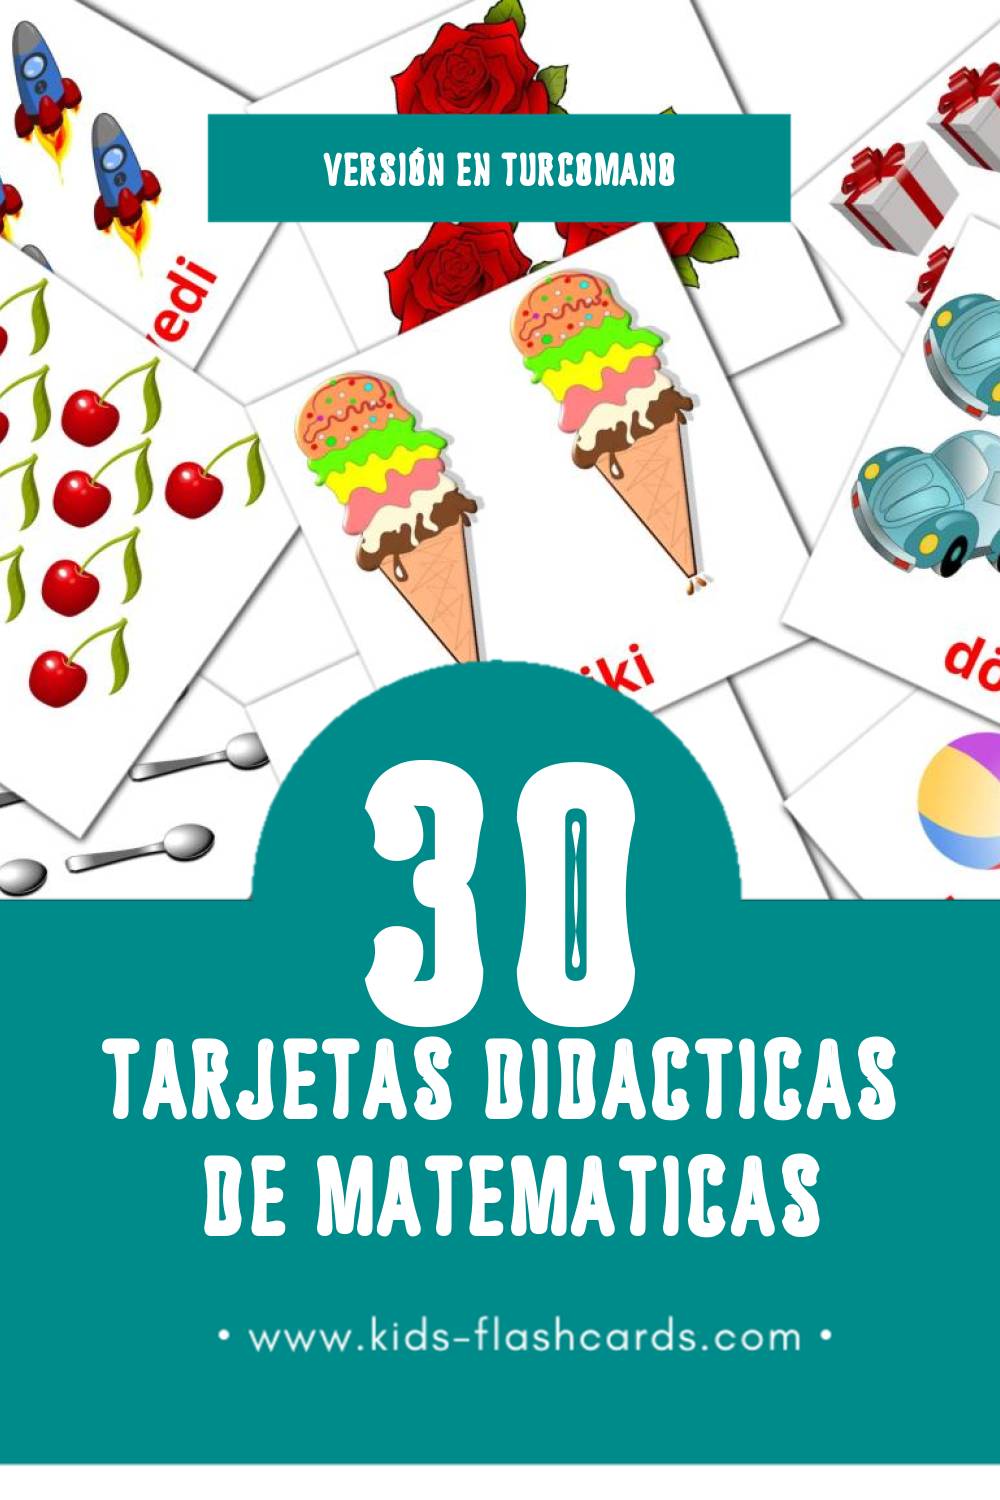 Tarjetas visuales de Matematika para niños pequeños (10 tarjetas en Turcomano)